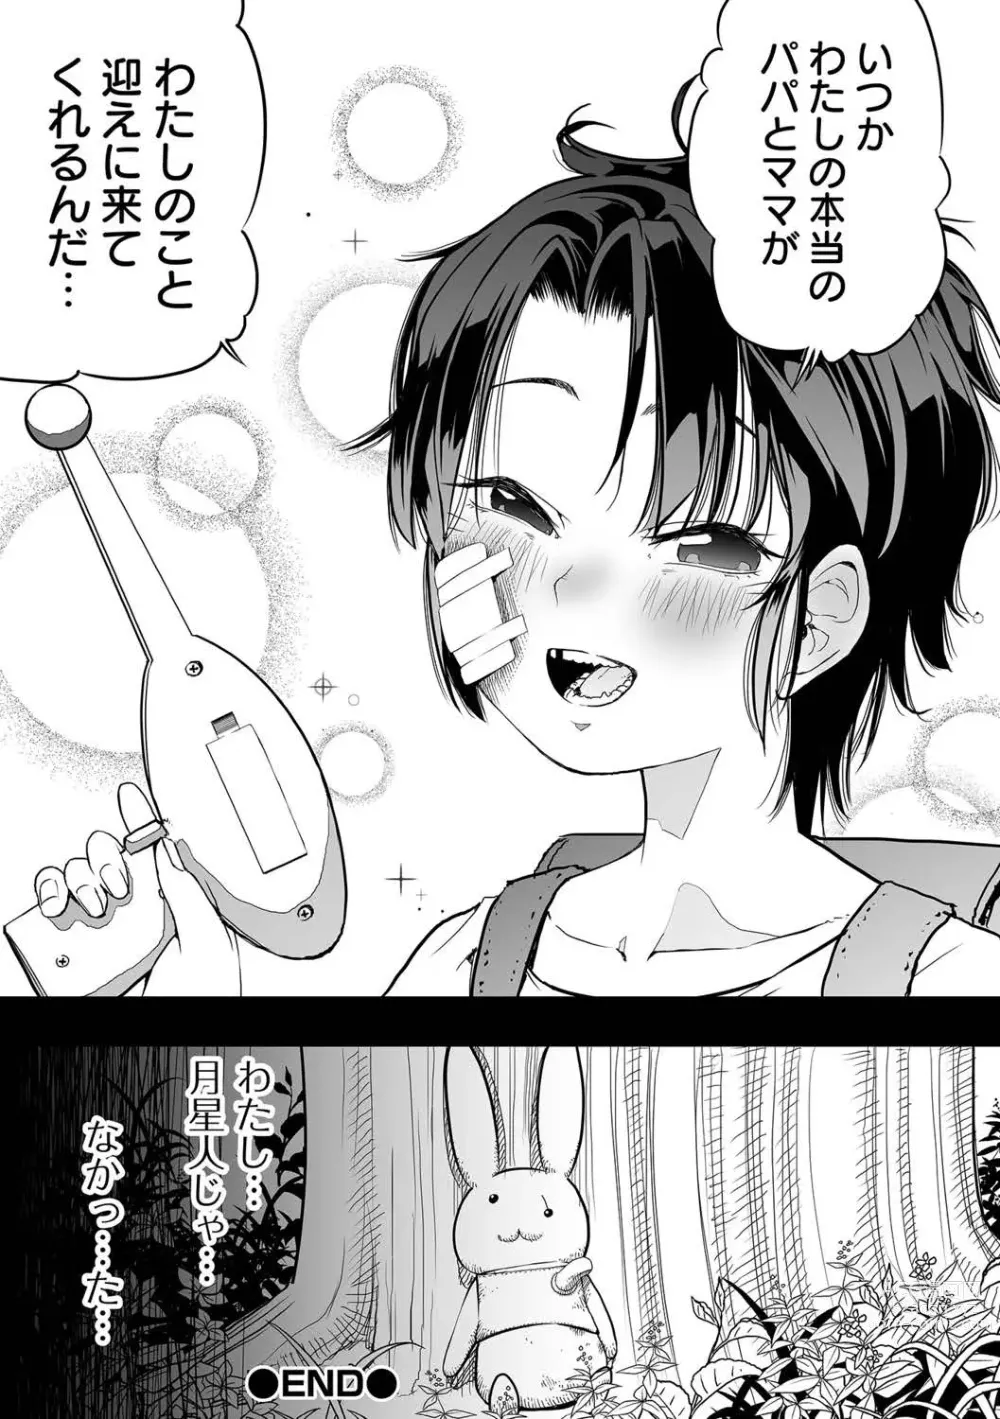 Page 96 of manga Ryona King Vol.23